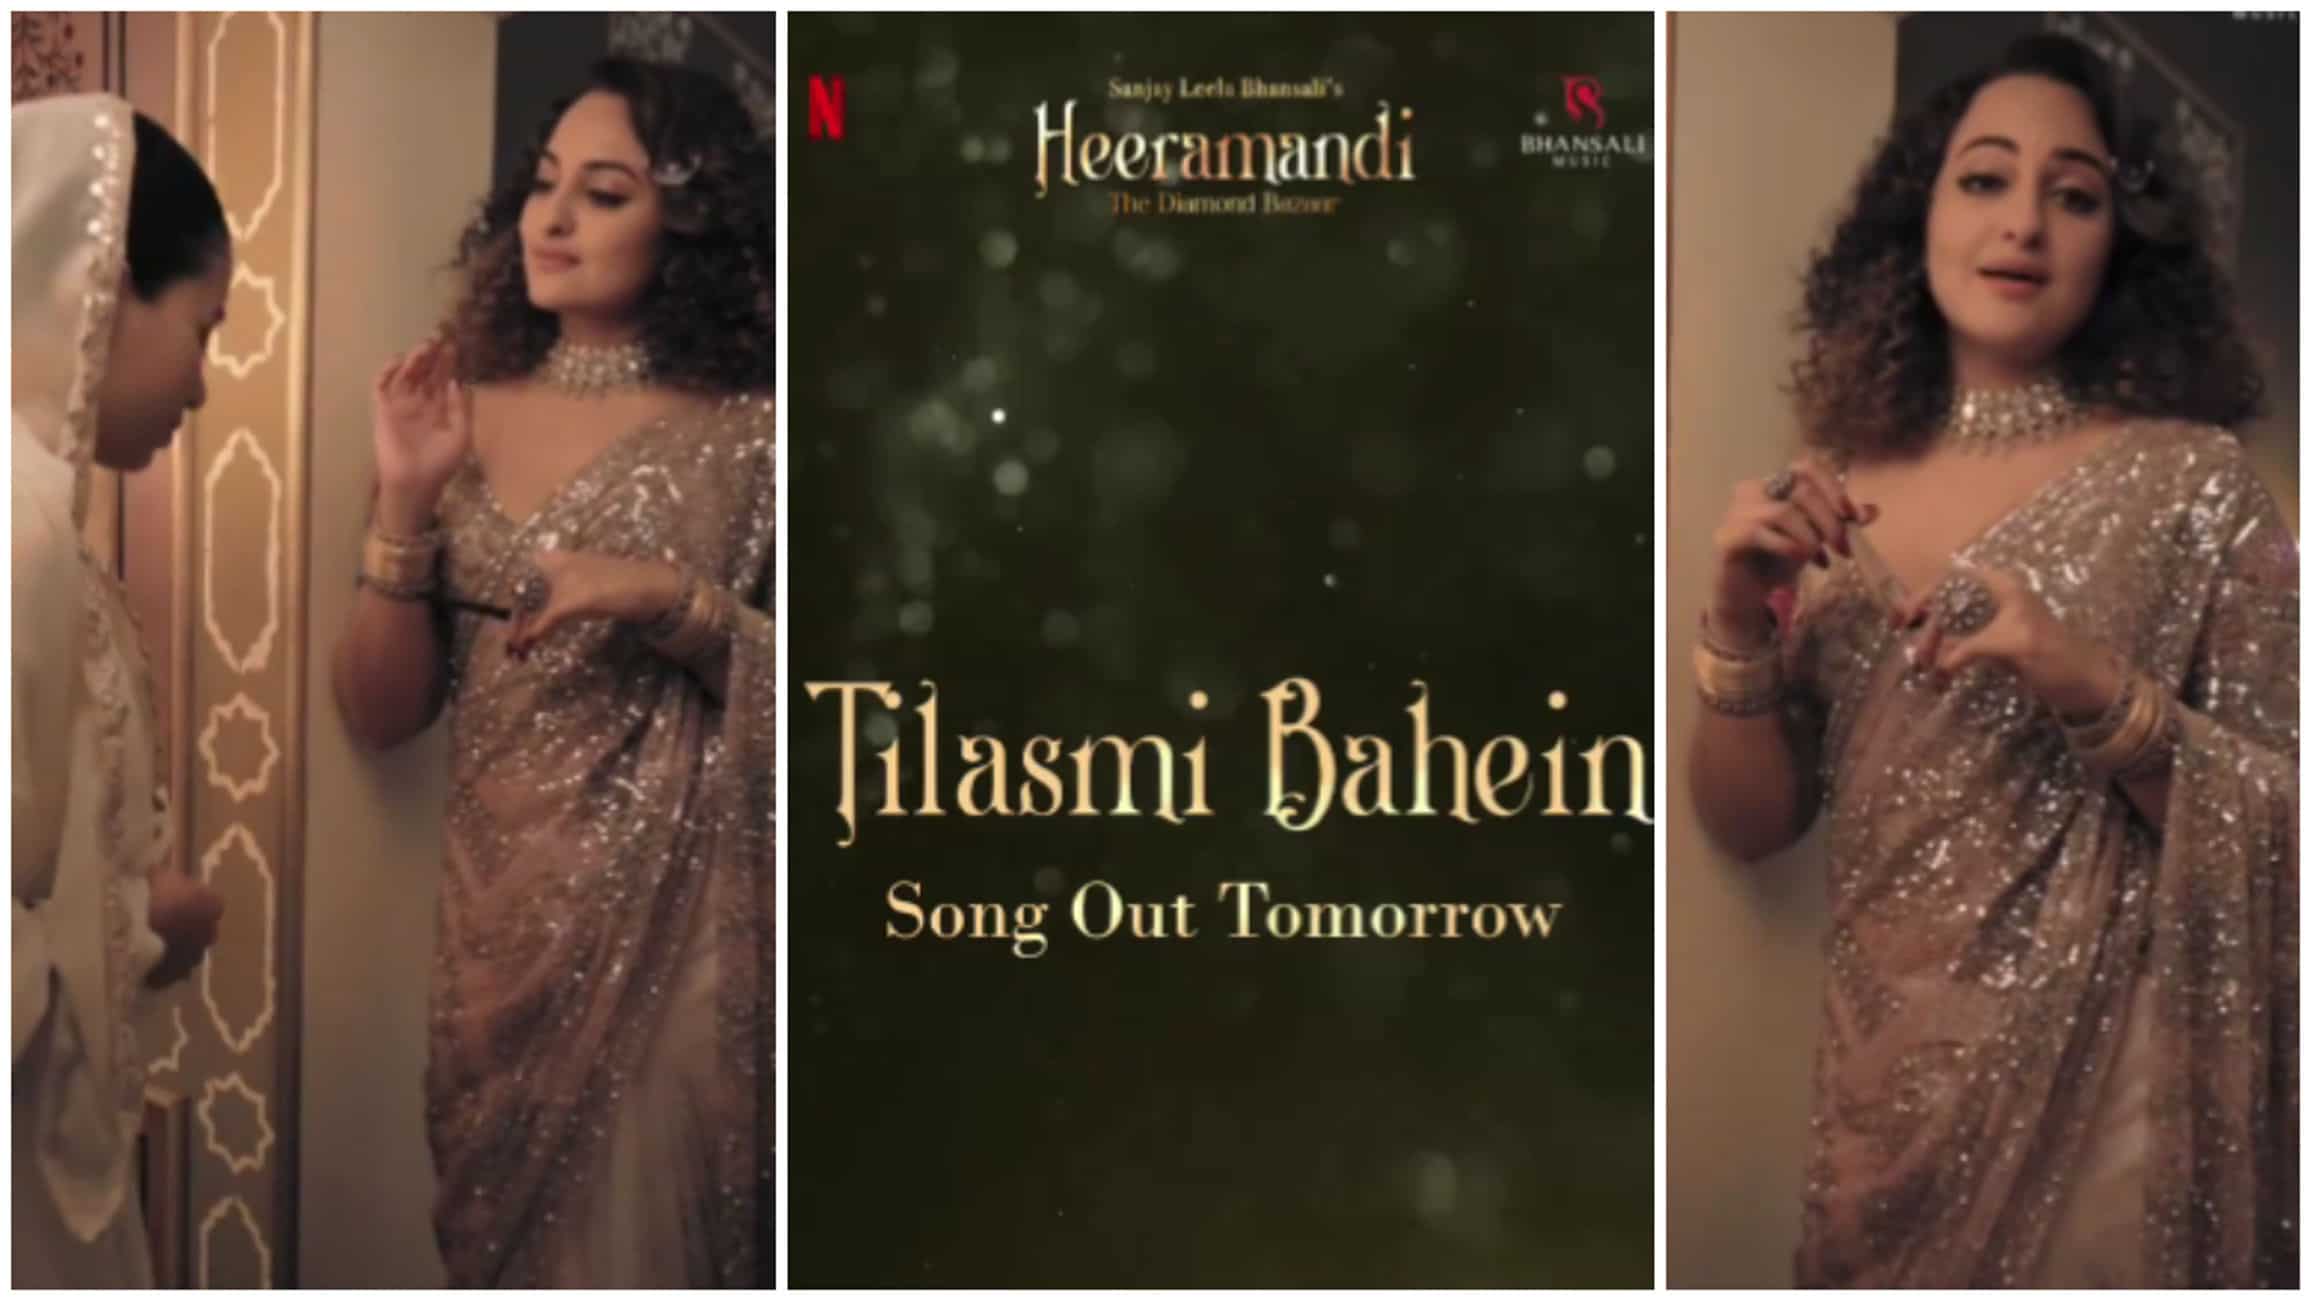 https://www.mobilemasala.com/music/Heeramandi-The-Diamond-Bazaar-Sonakshi-Sinha-teases-fans-on-series-upcoming-song-Tilasmi-Bahein-Watch-i229283